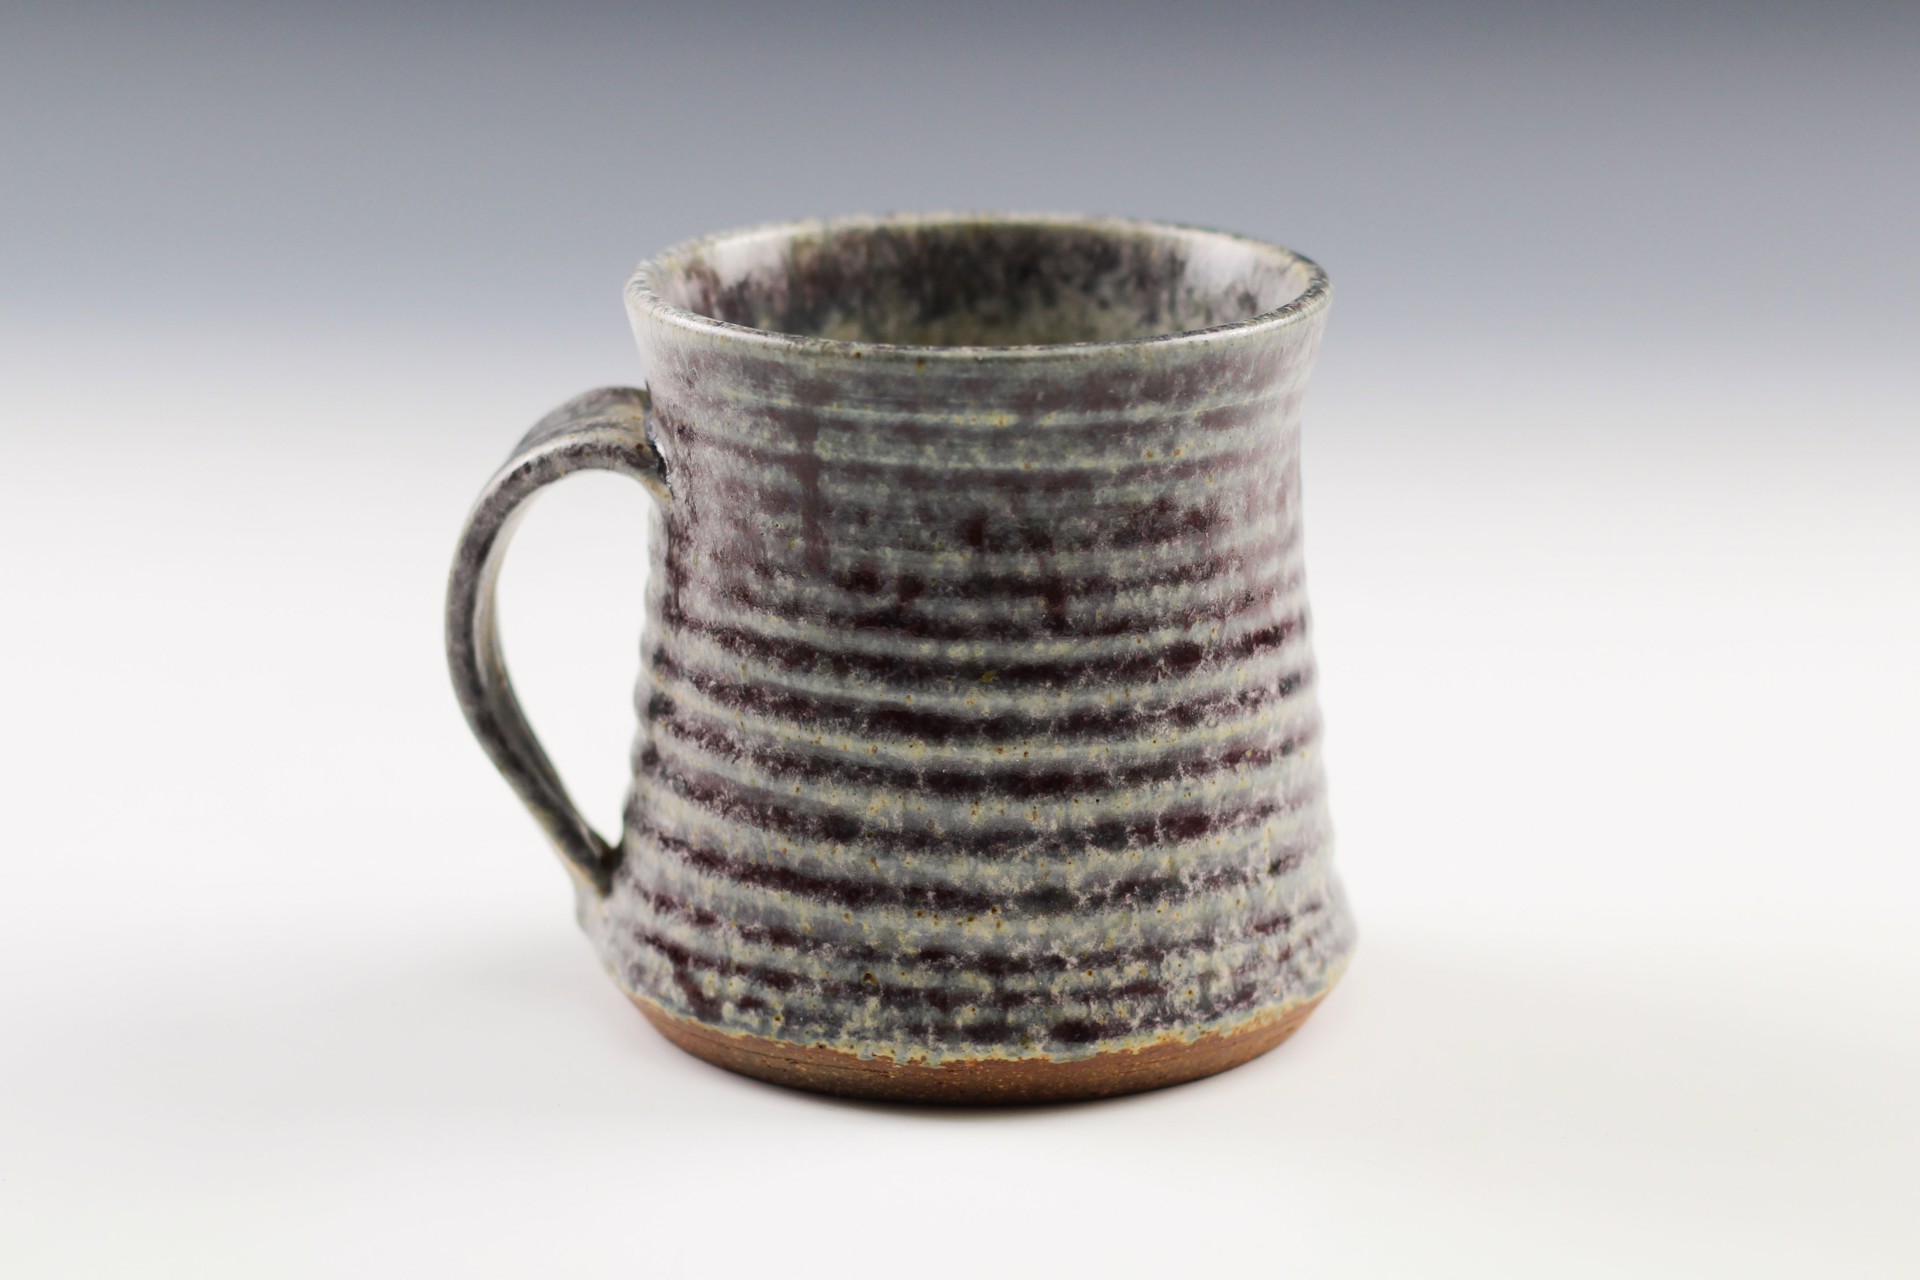 Mug by Winthrop Byers